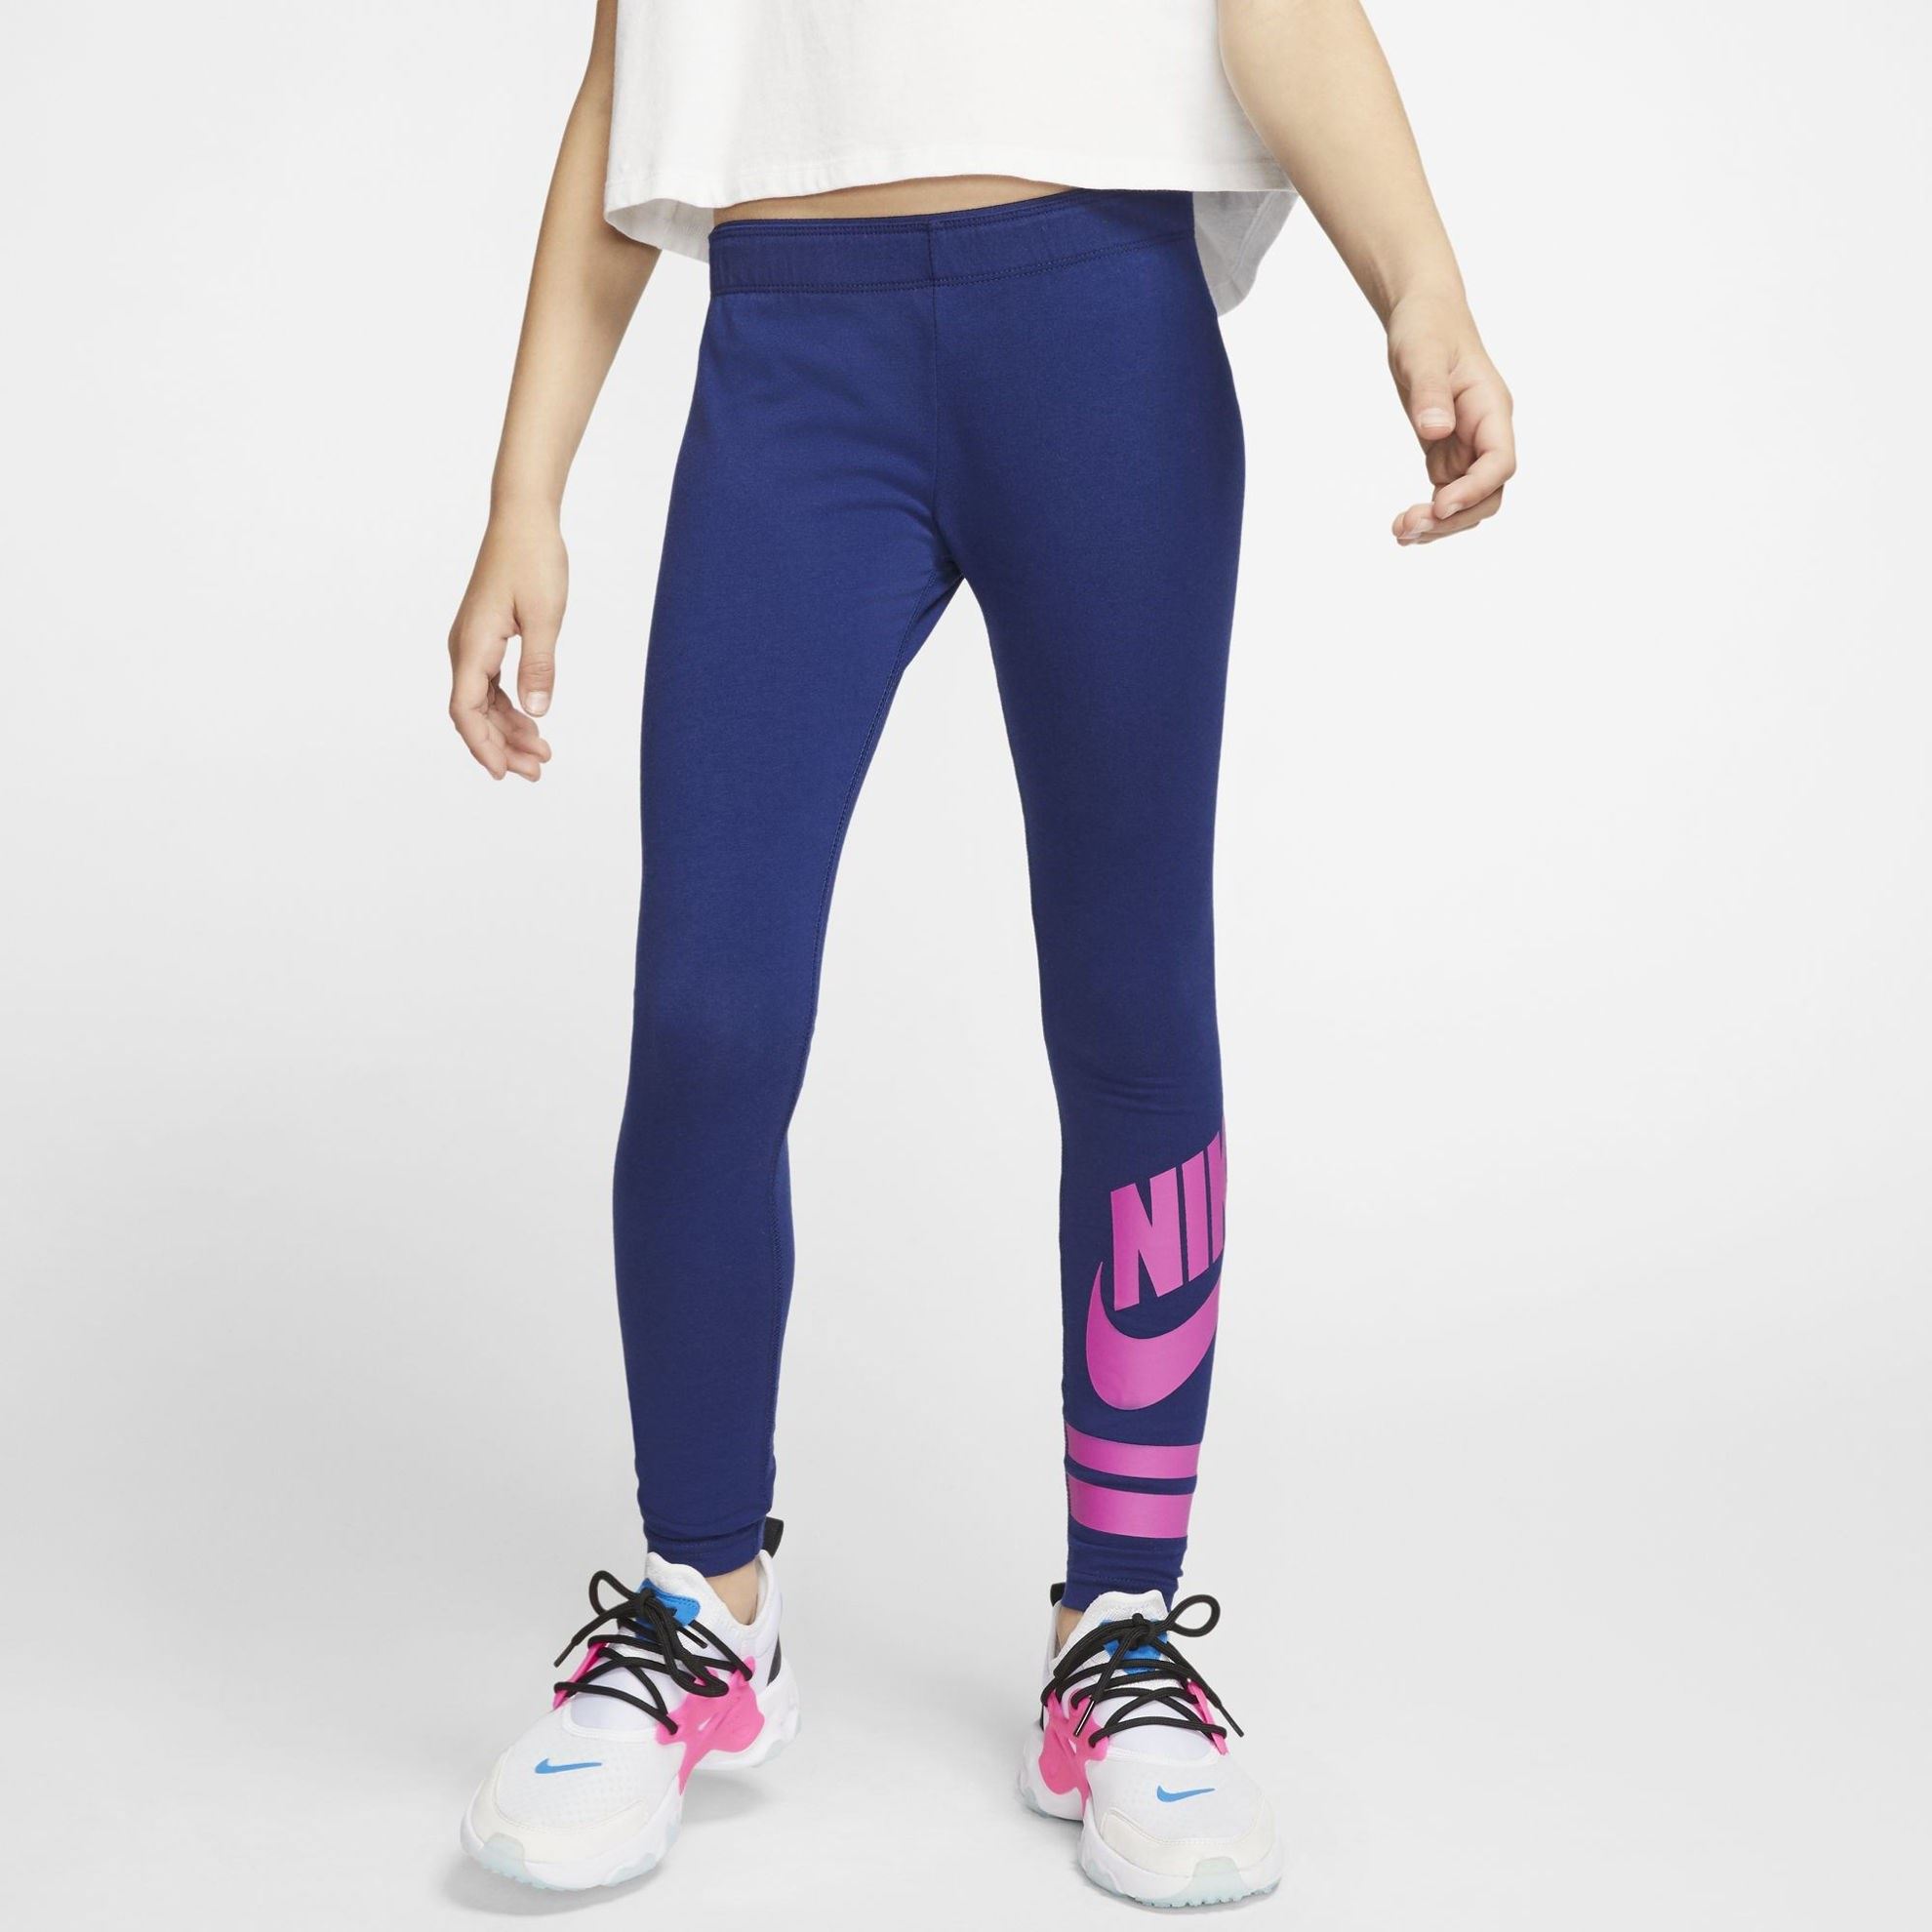 blue and pink nike leggings